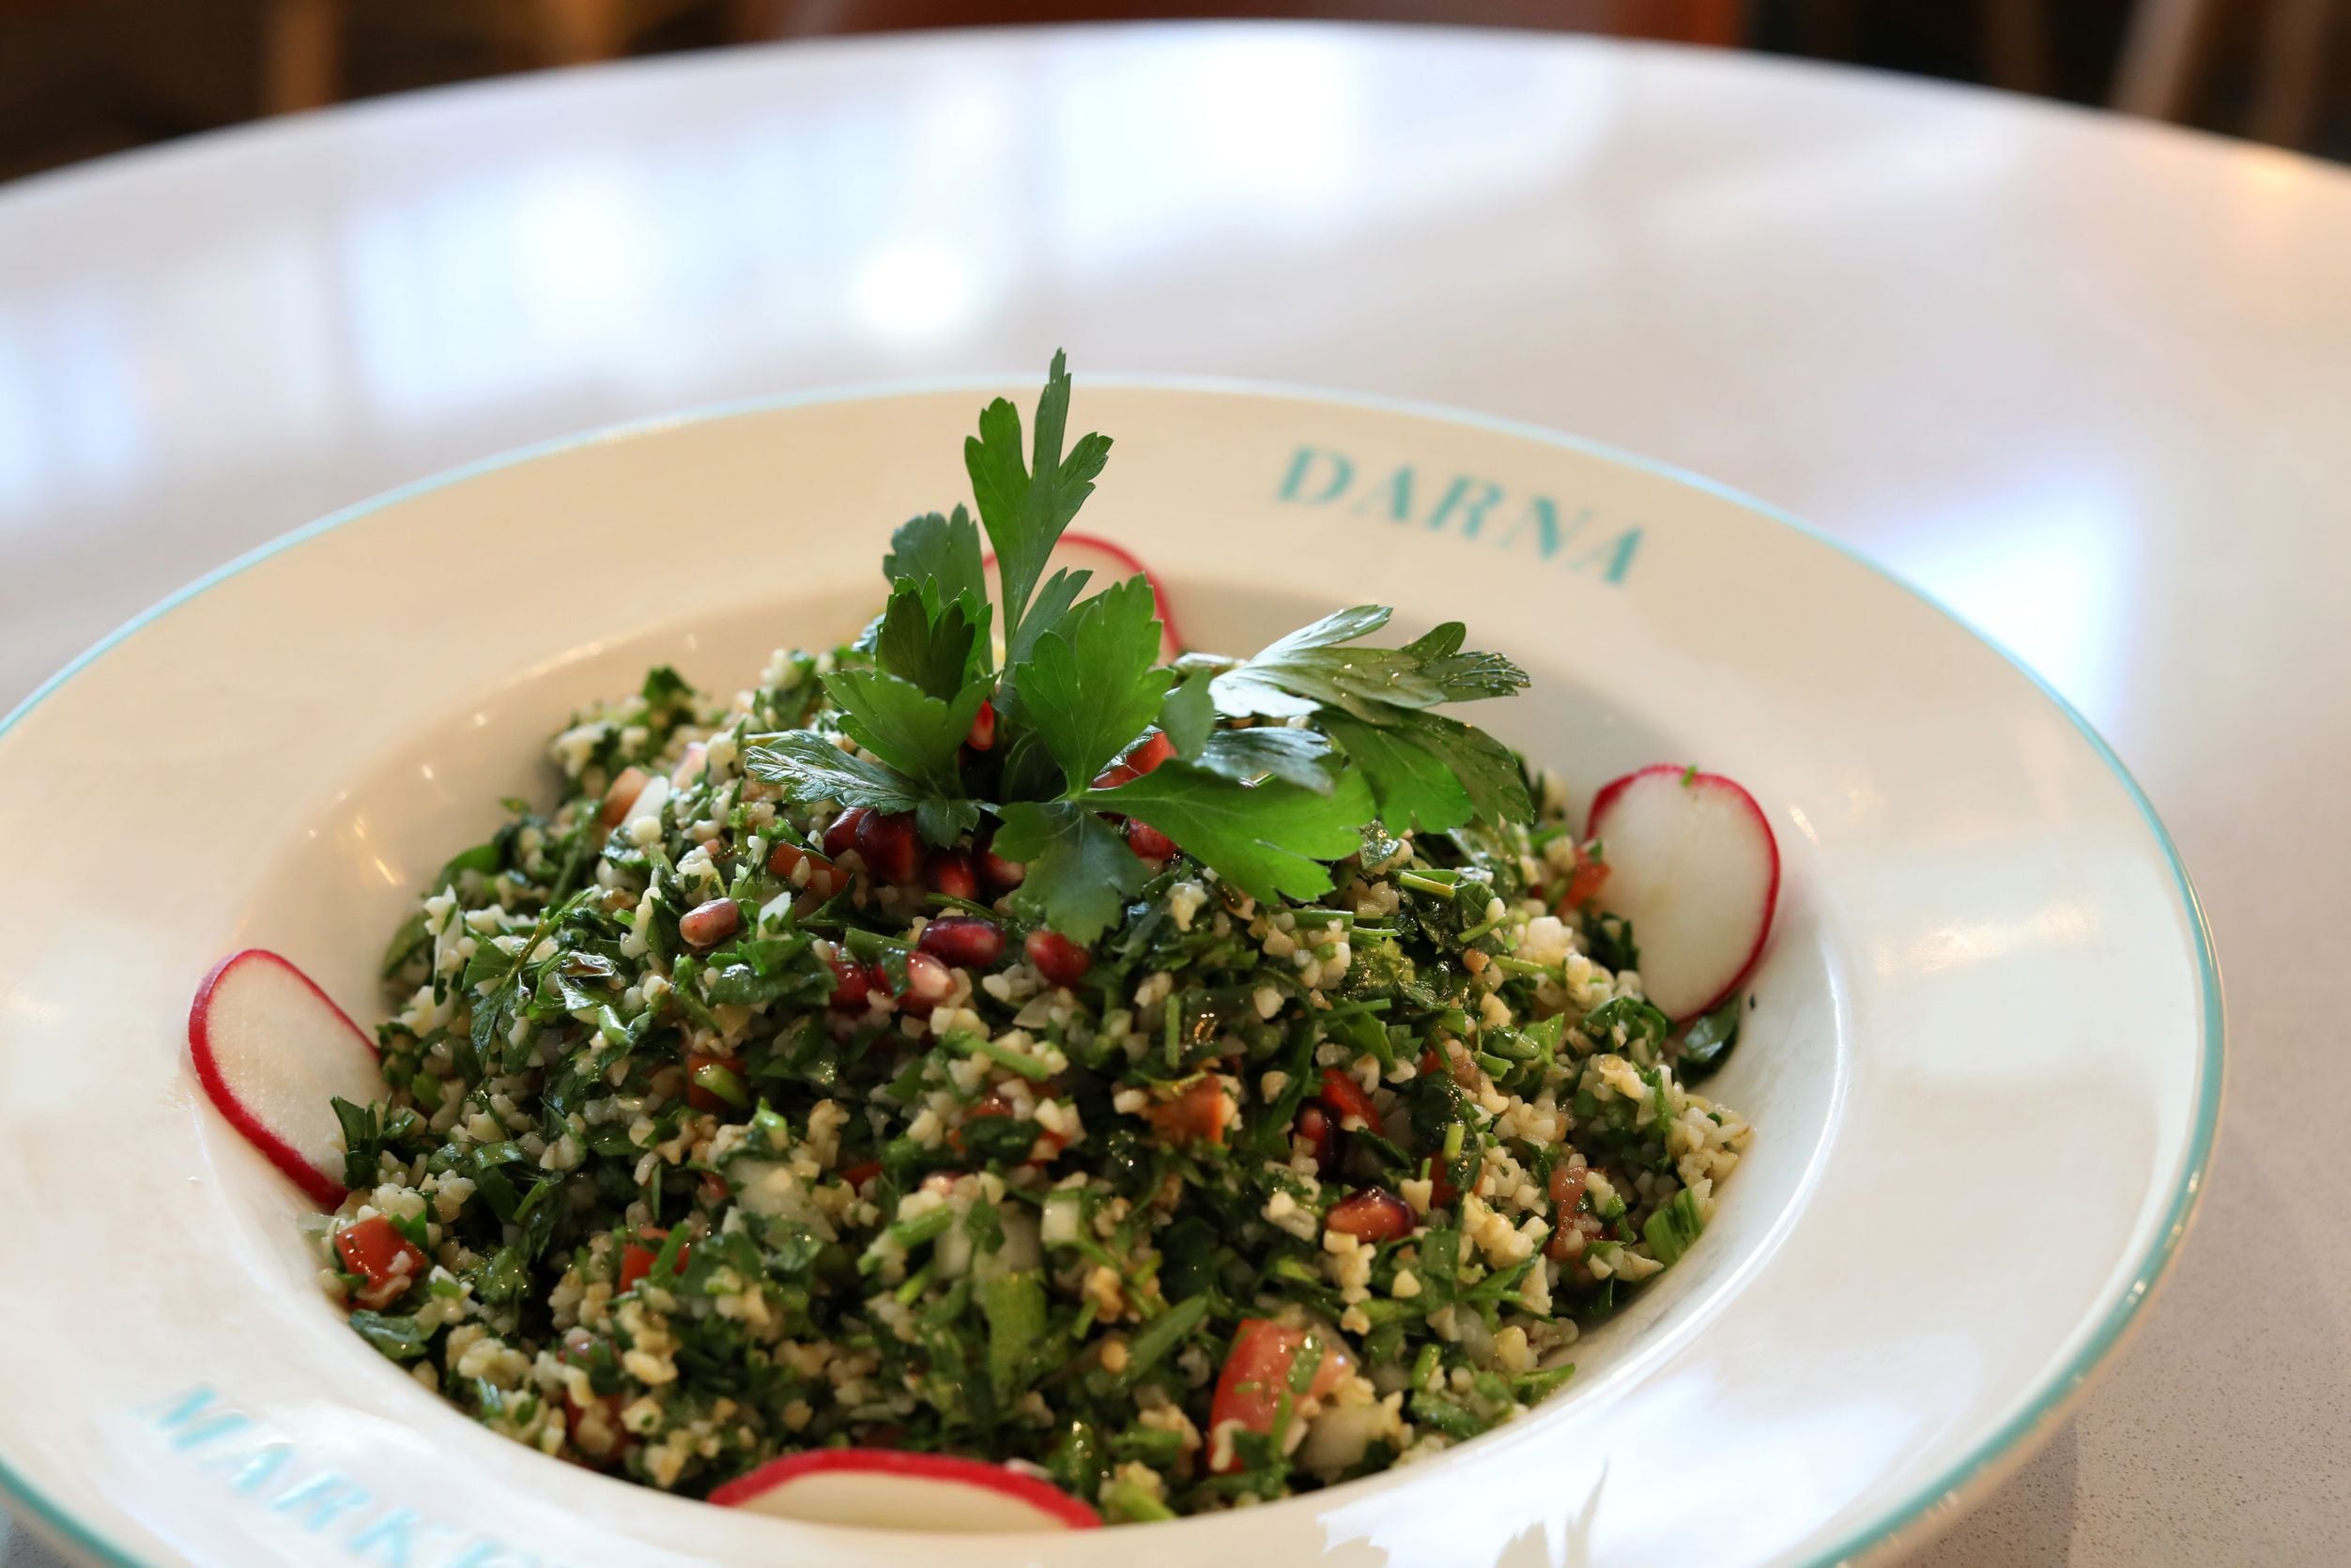 The Tabbouleh Salad at Darna in Plano